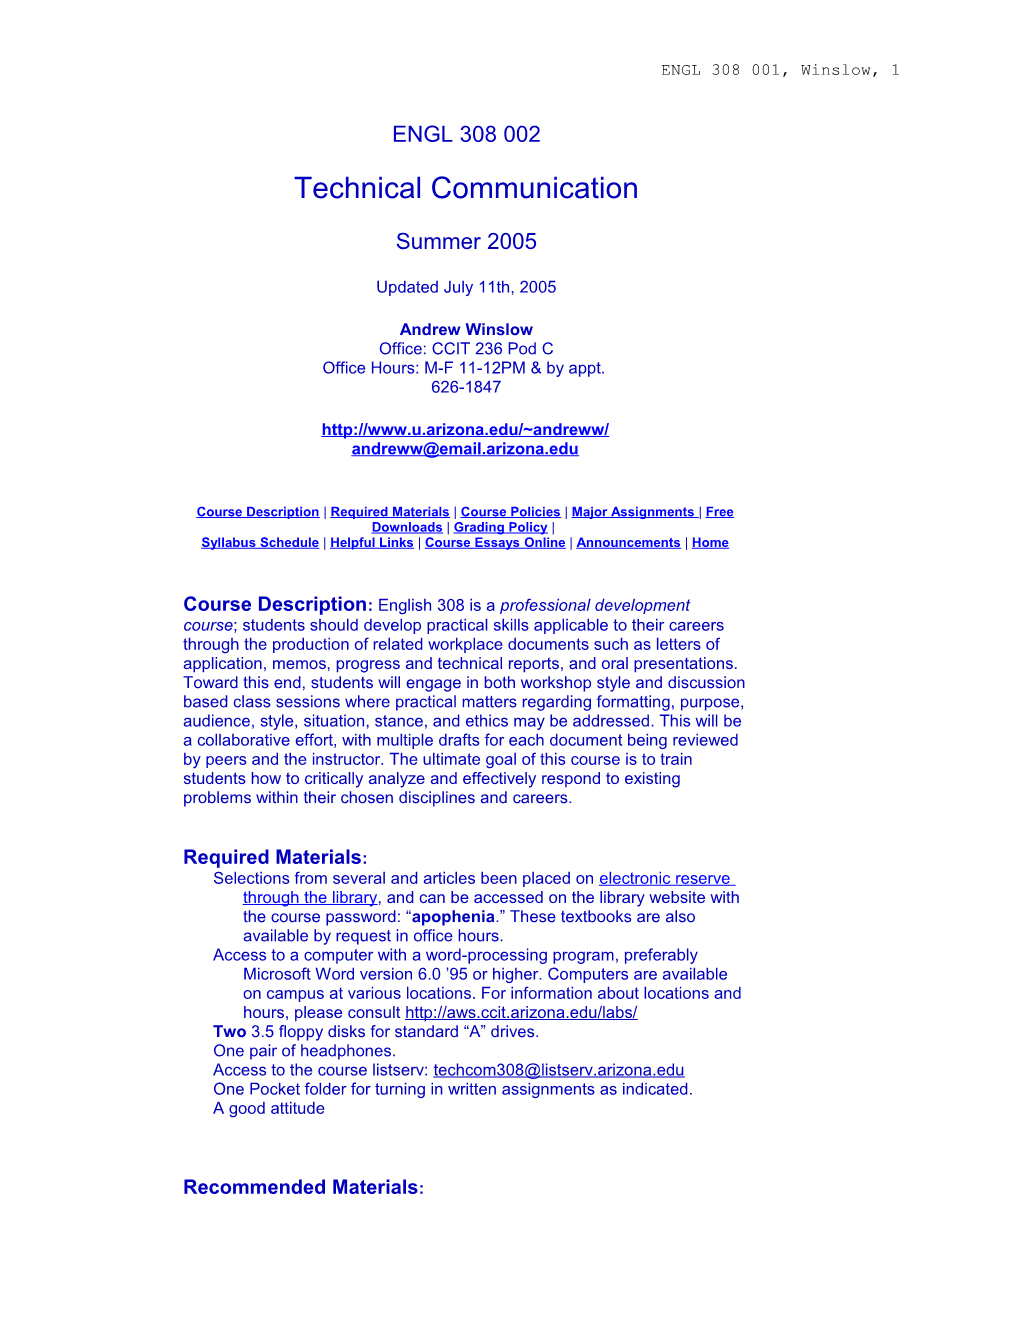 Technical Communication - ENGL 308